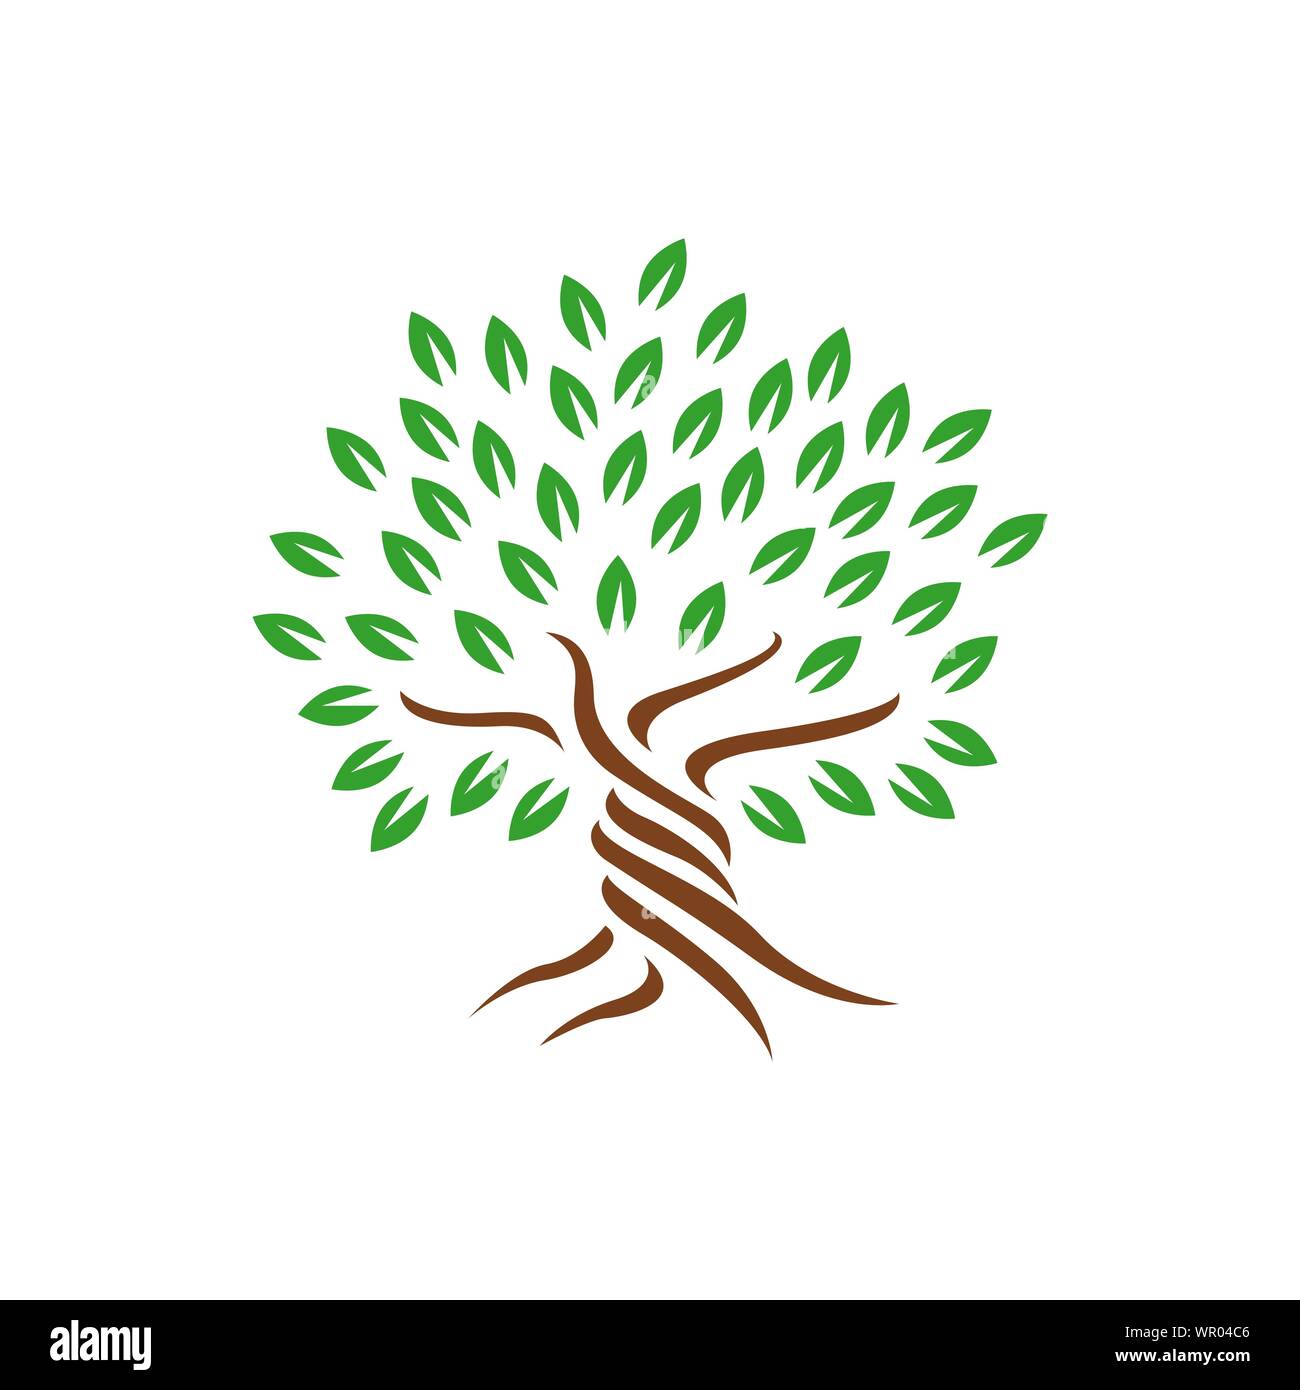 Einfache Silhouette des Baumes logo Vektorgrafiken Illustrationen Stock Vektor